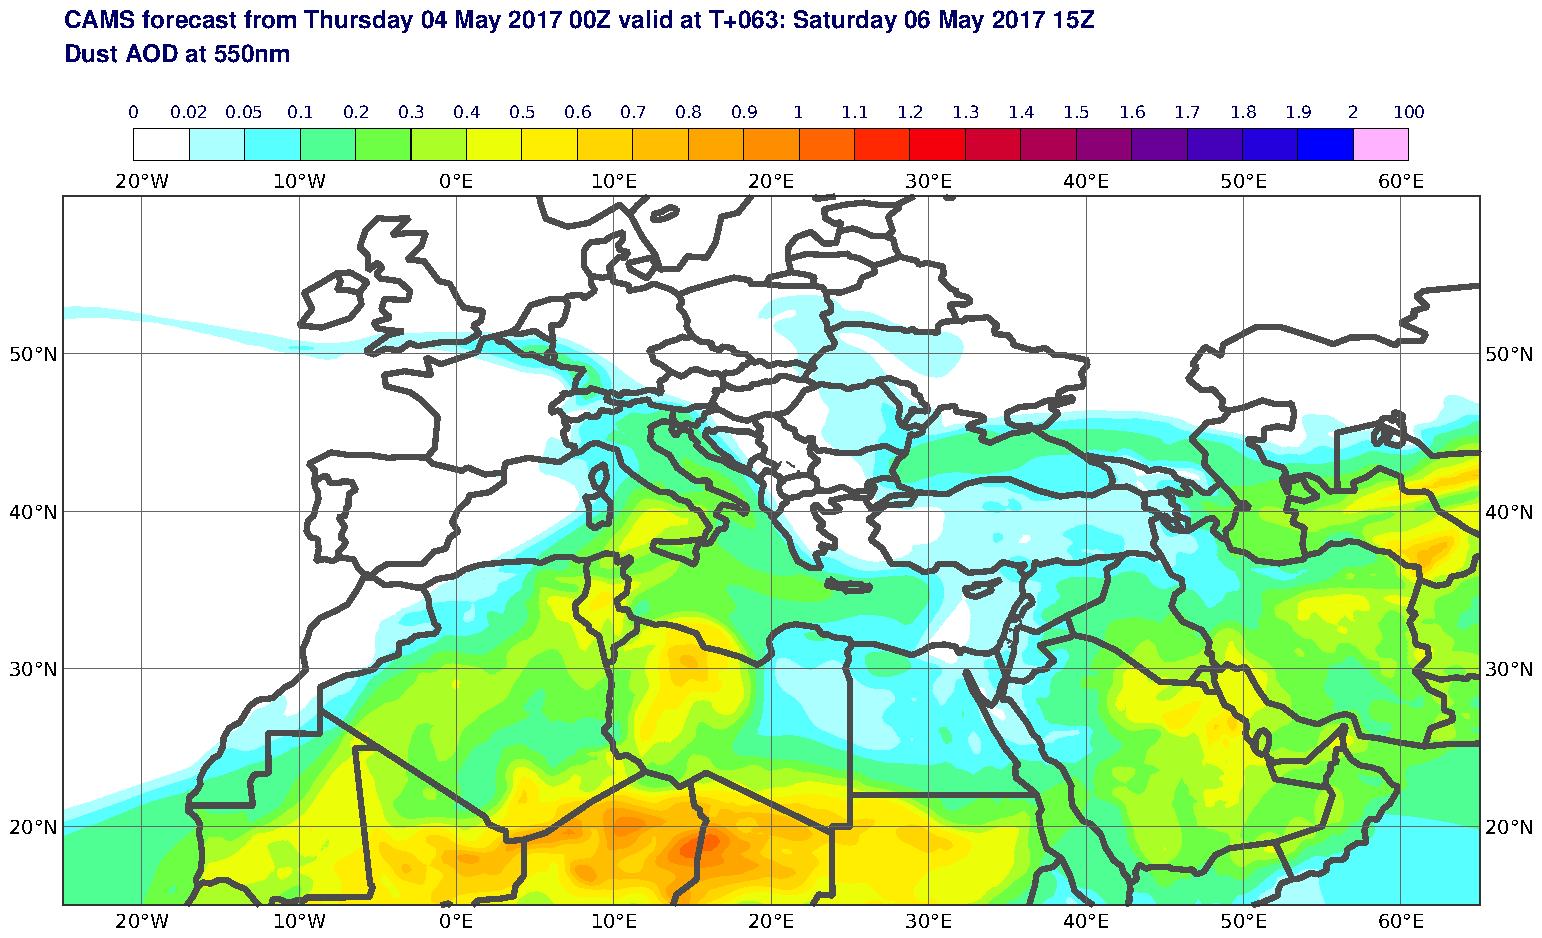 Dust AOD at 550nm valid at T63 - 2017-05-06 15:00